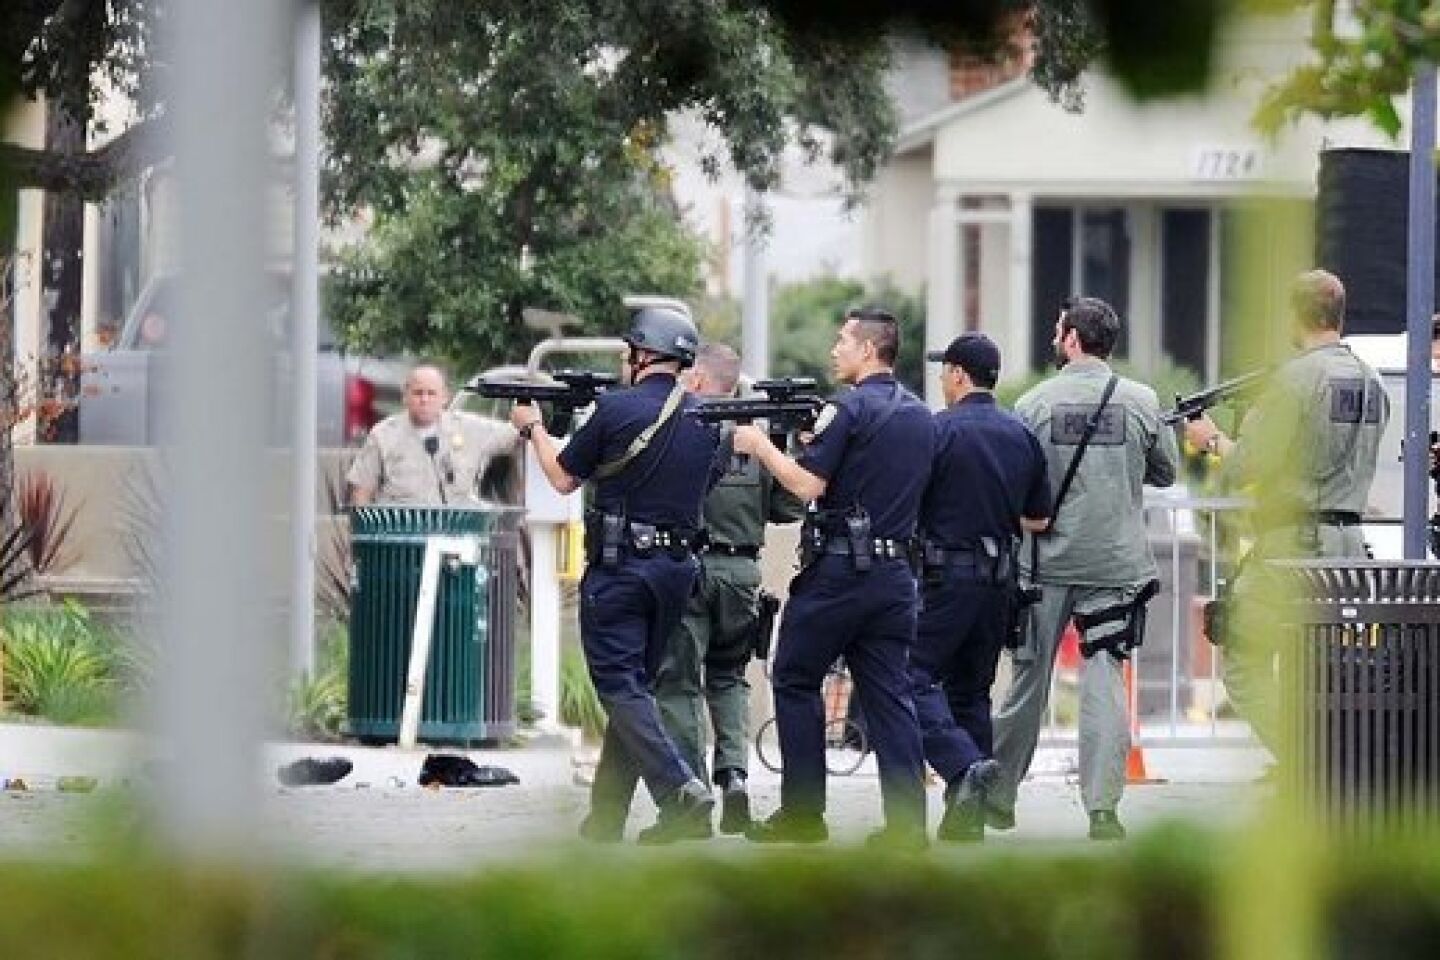 Shots fired at Santa Monica College